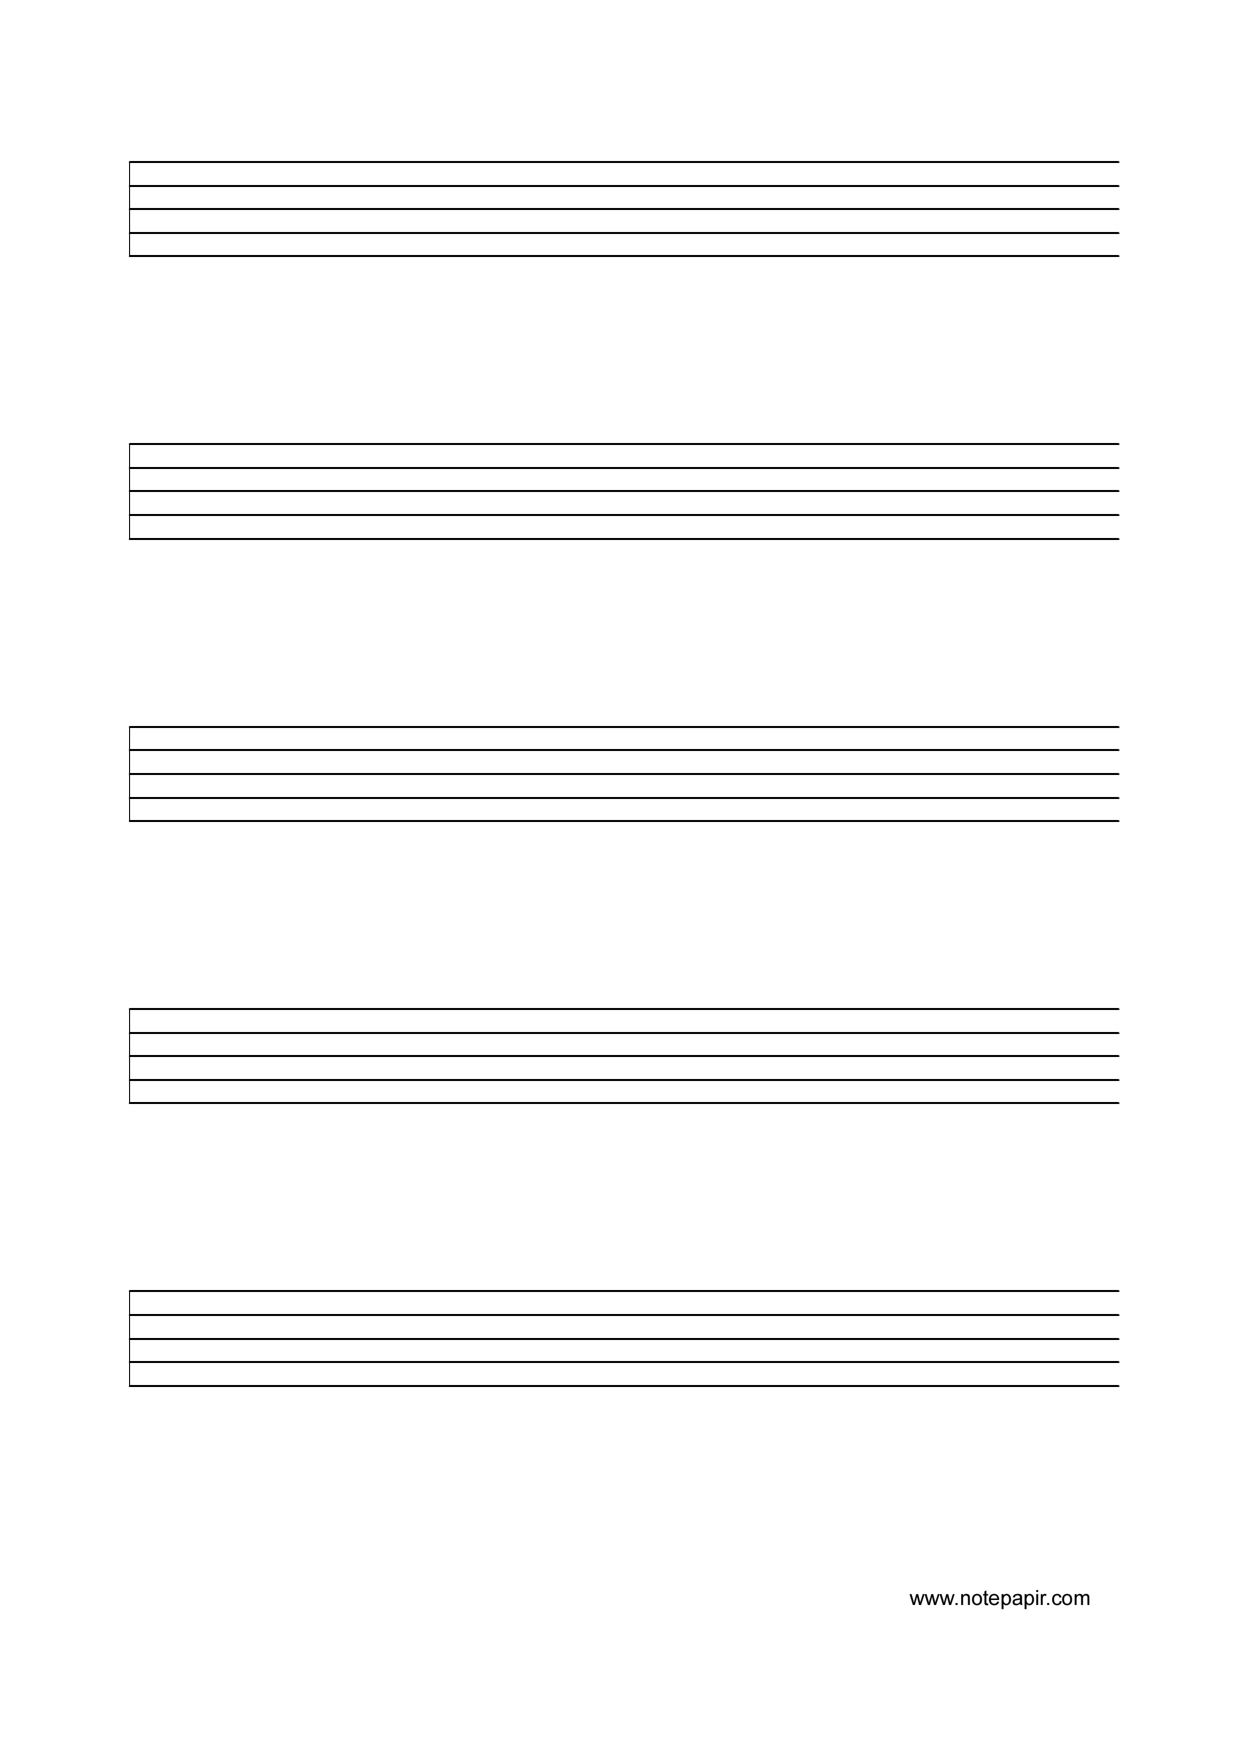 Music Staff Paper Template. Blank Treble Clef Staff Paper Free Sheet - Free Printable Staff Paper Blank Sheet Music Net